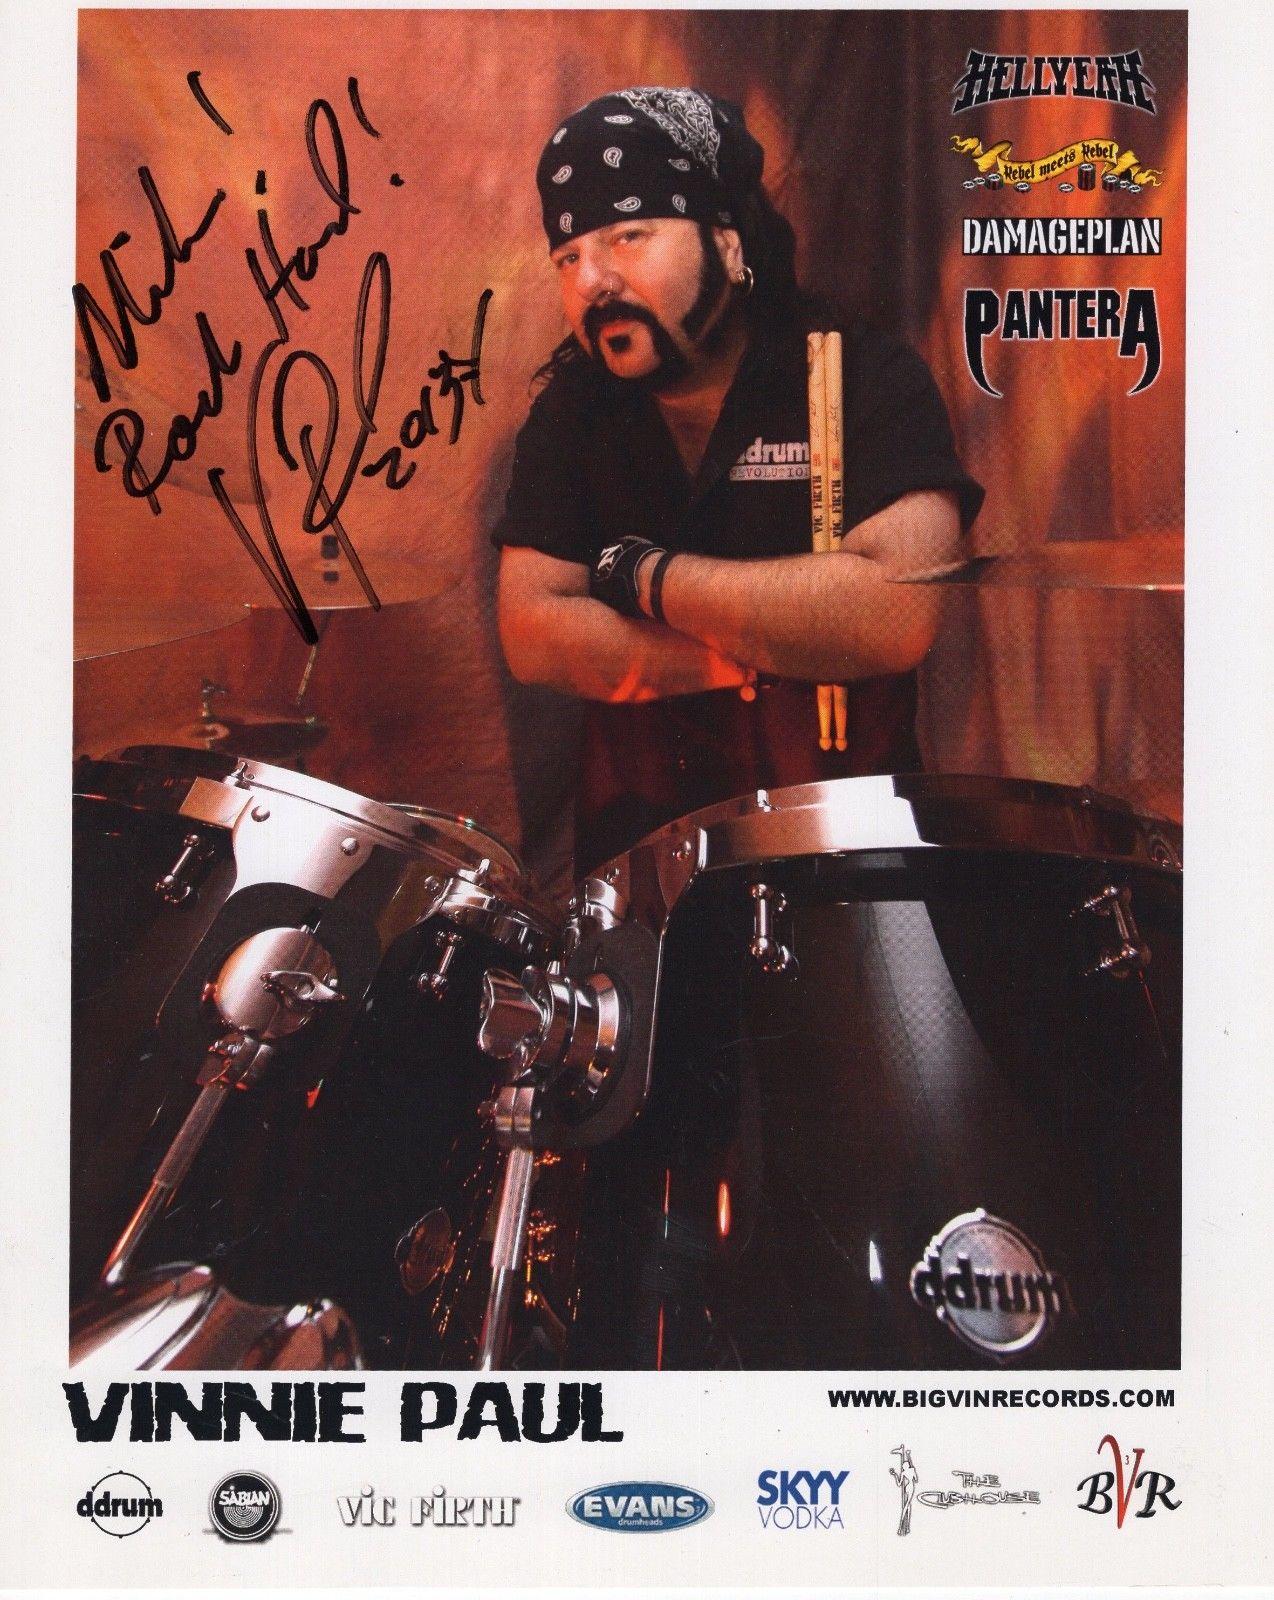 Vinnie Paul Poster 13x19 inch Color Wall Art Print Pantera Hell Yeah